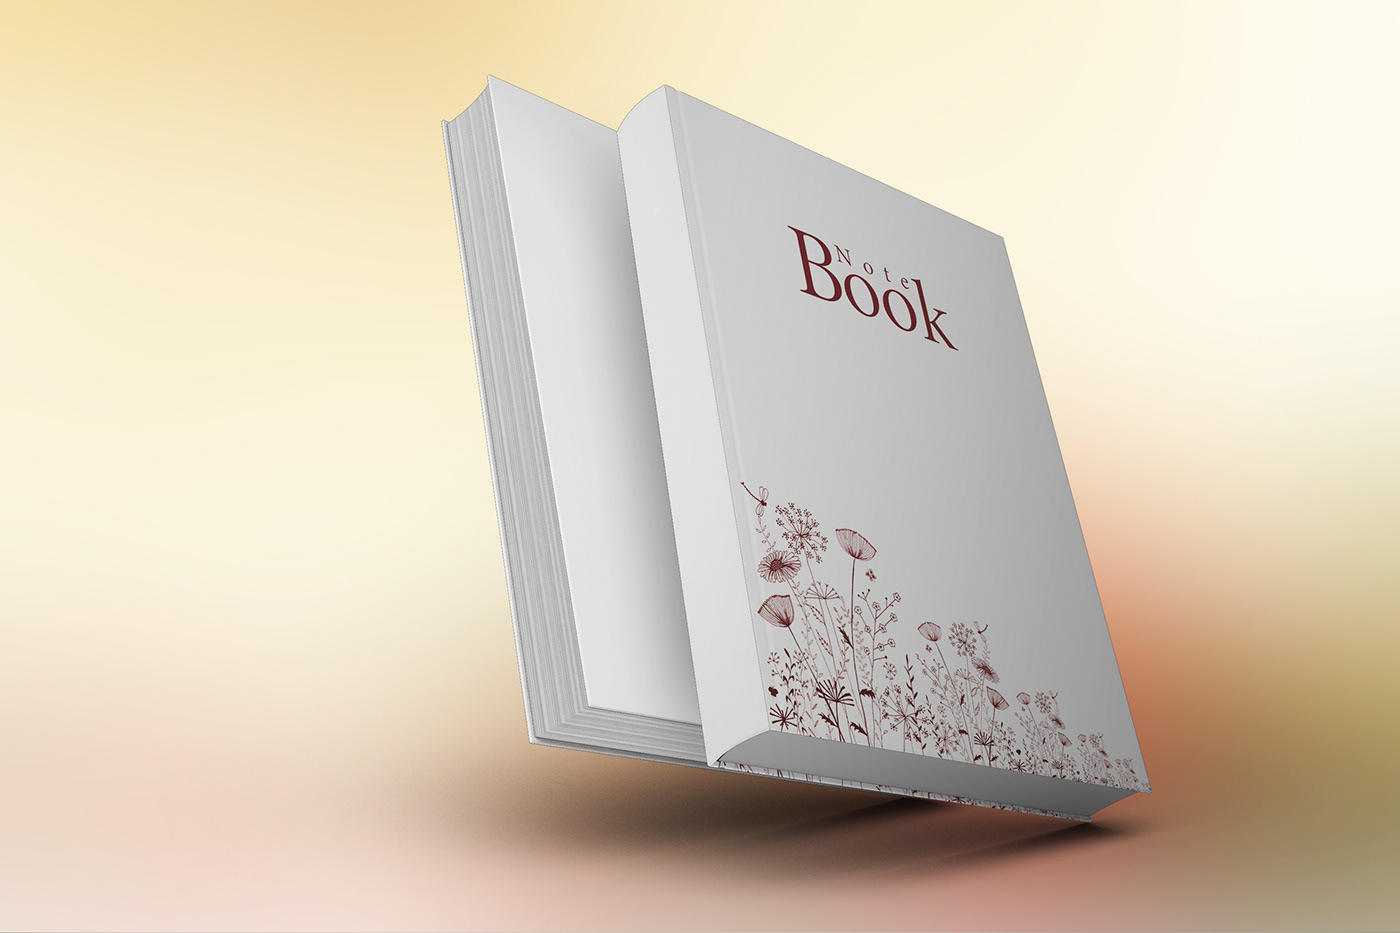 Book Cover Design Cover Art book design book cover books Booklet book notebook covr design Note Book Design